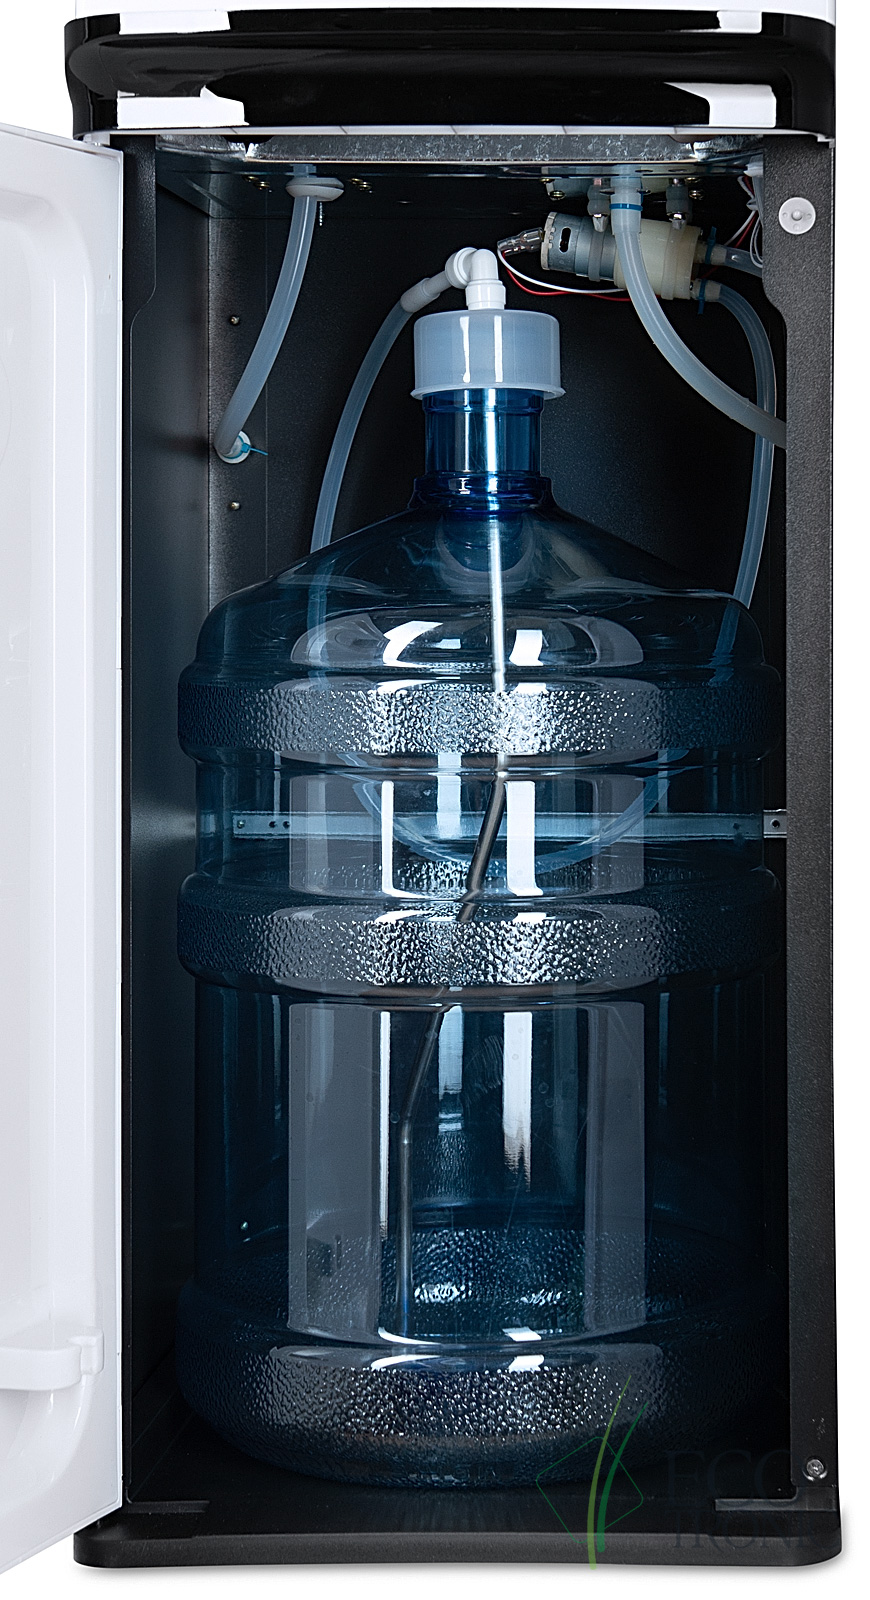 Кулер для воды Ecotronic K41-LXE white/black